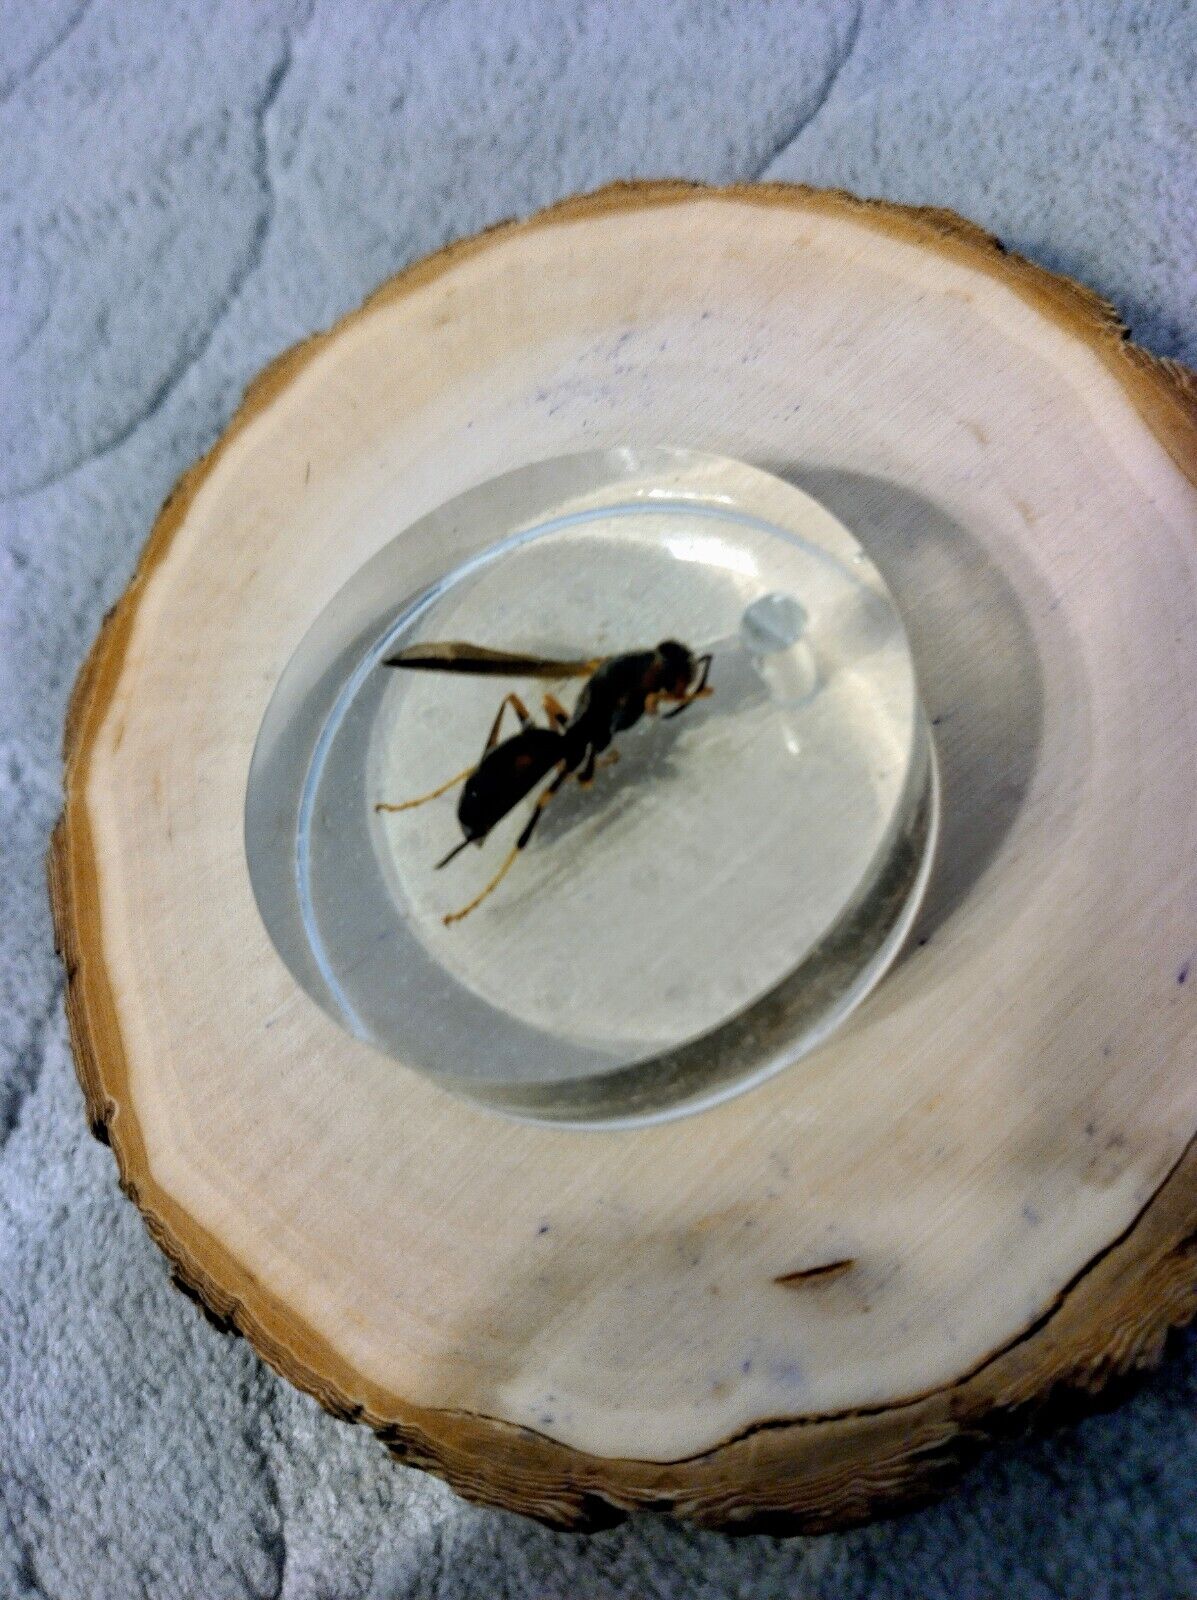 Real Wasp Preserved In Resin Specimen